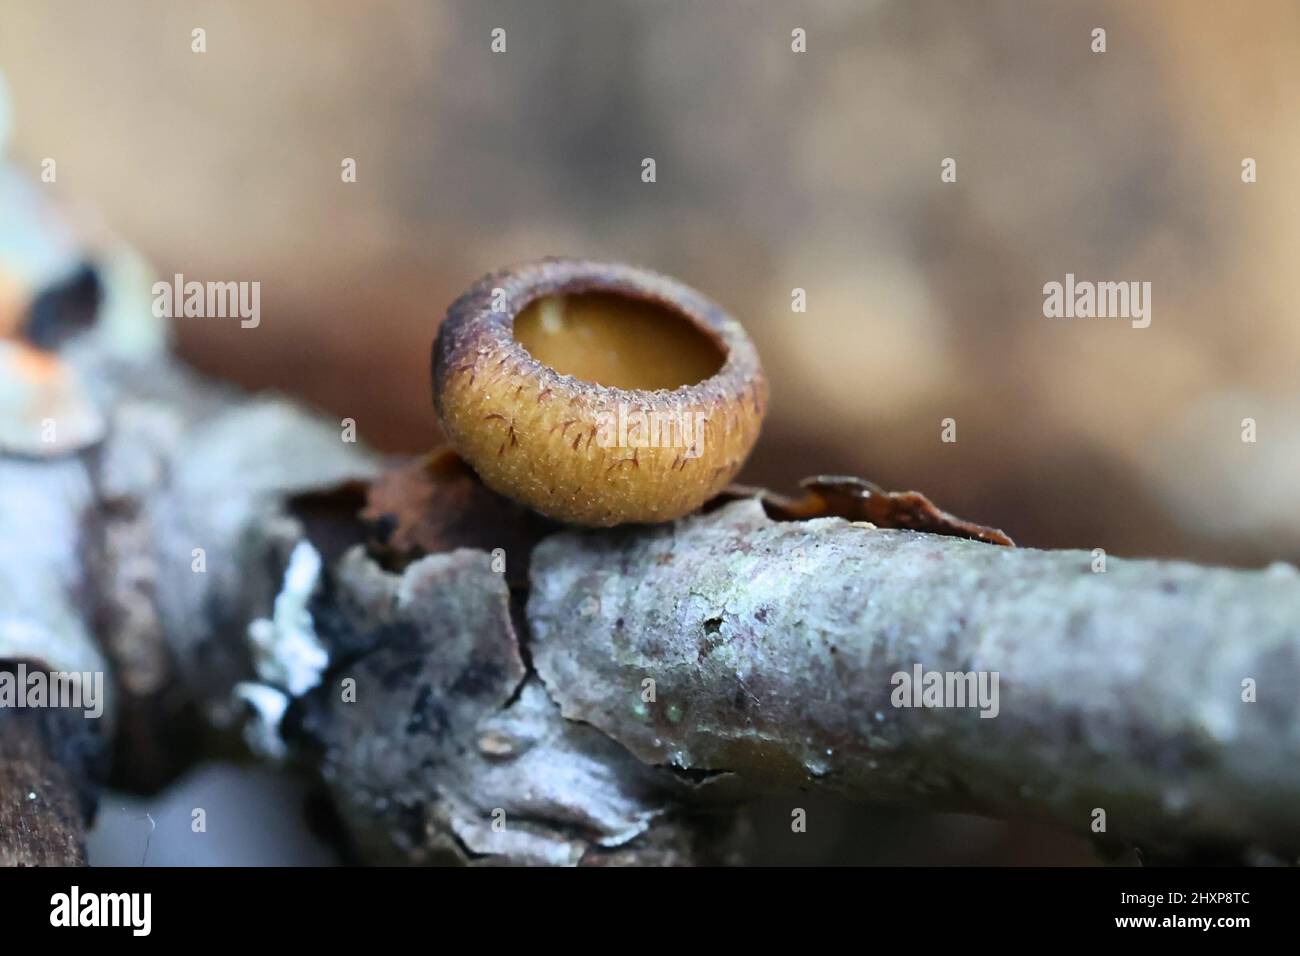 Rutstroemia alni, a cup fungus growing on grey alder, wild fungus from Finland Stock Photo